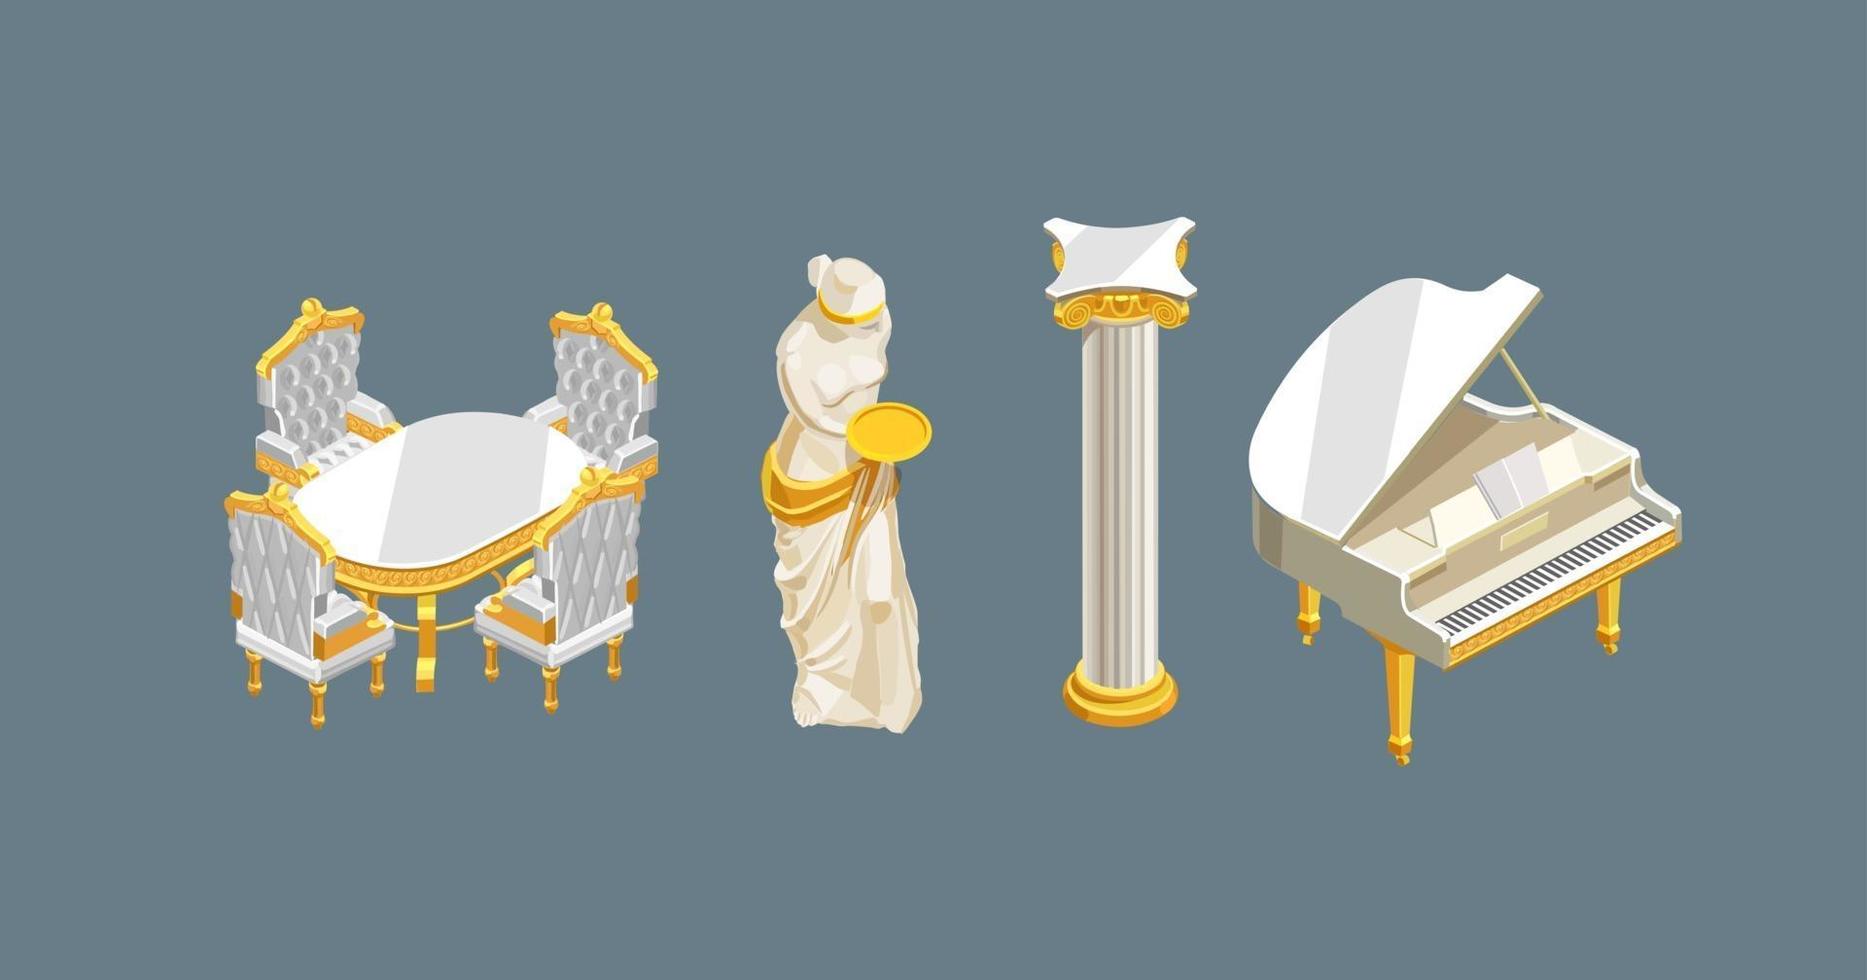 interiörelement i klassisk isometrisk stil. piano, bord, stol, staty, kolumn. vektor illustration